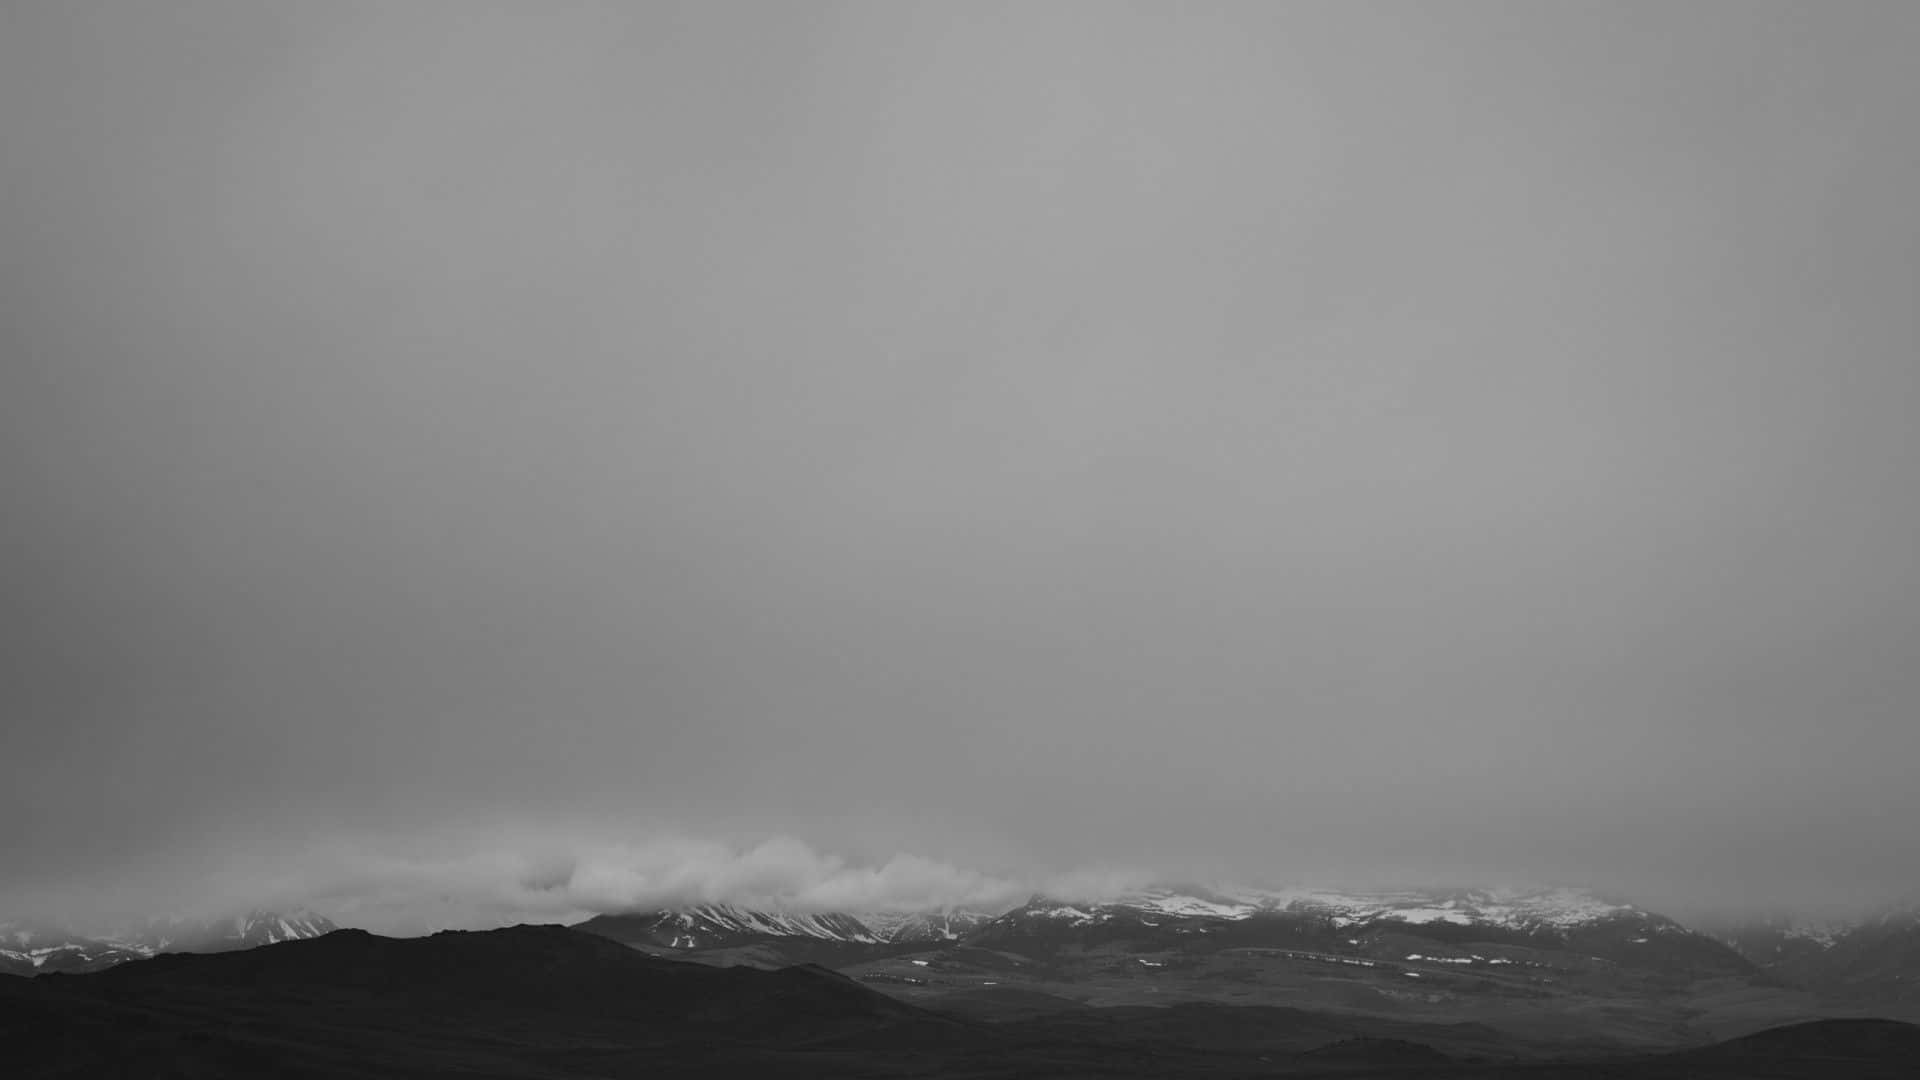 A Black And White Photo Of A Mountain Range